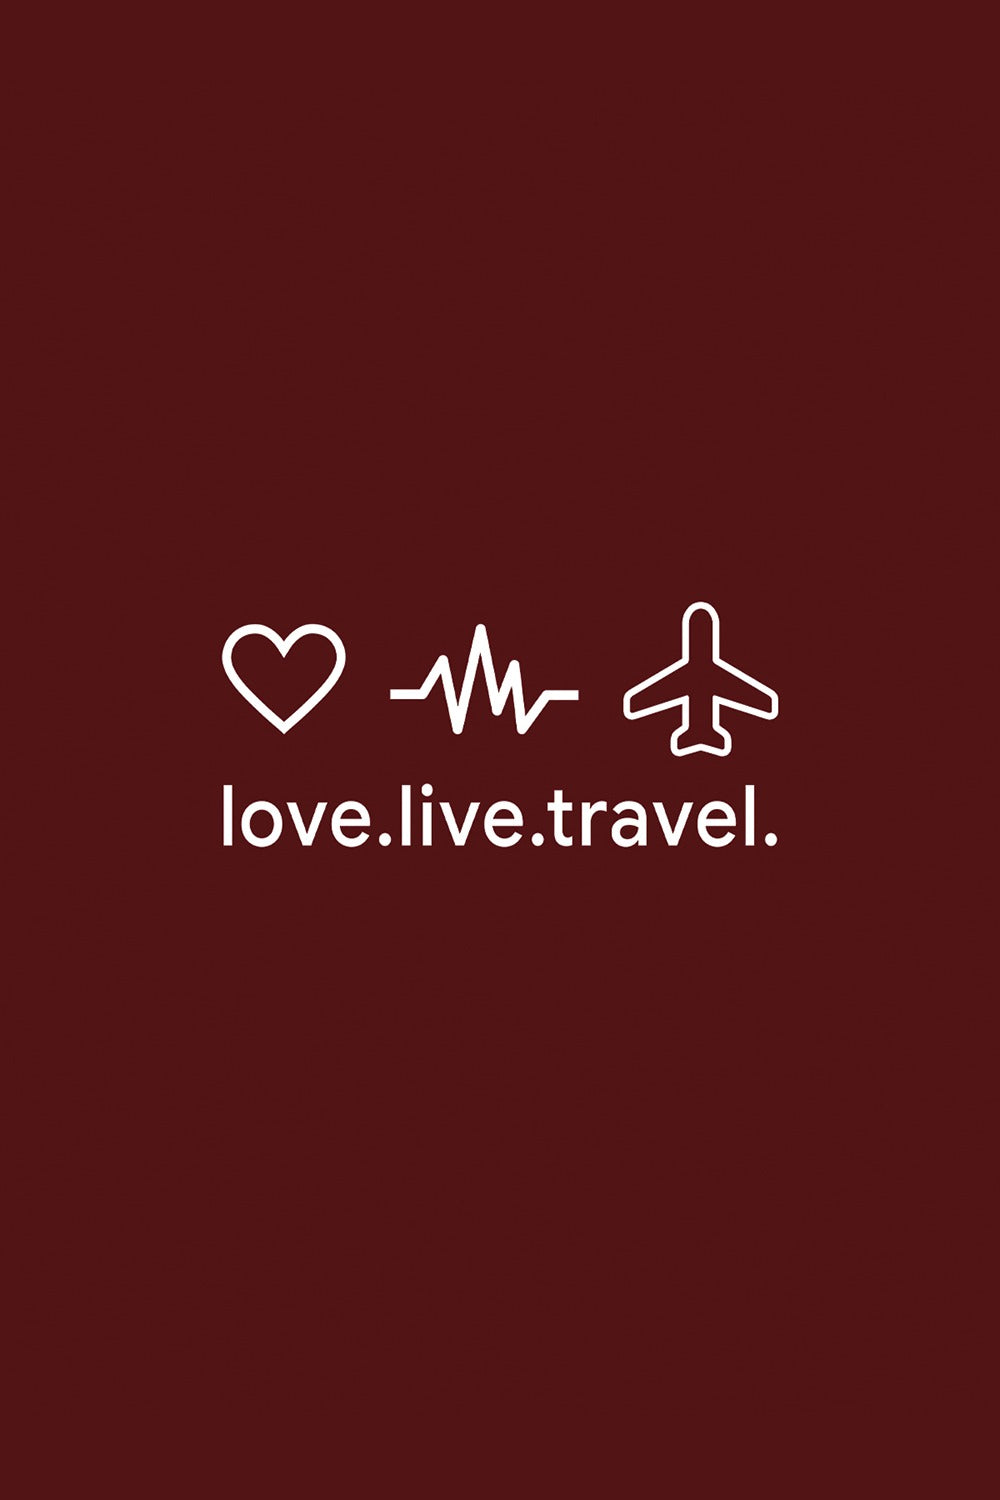 Love Live Travel